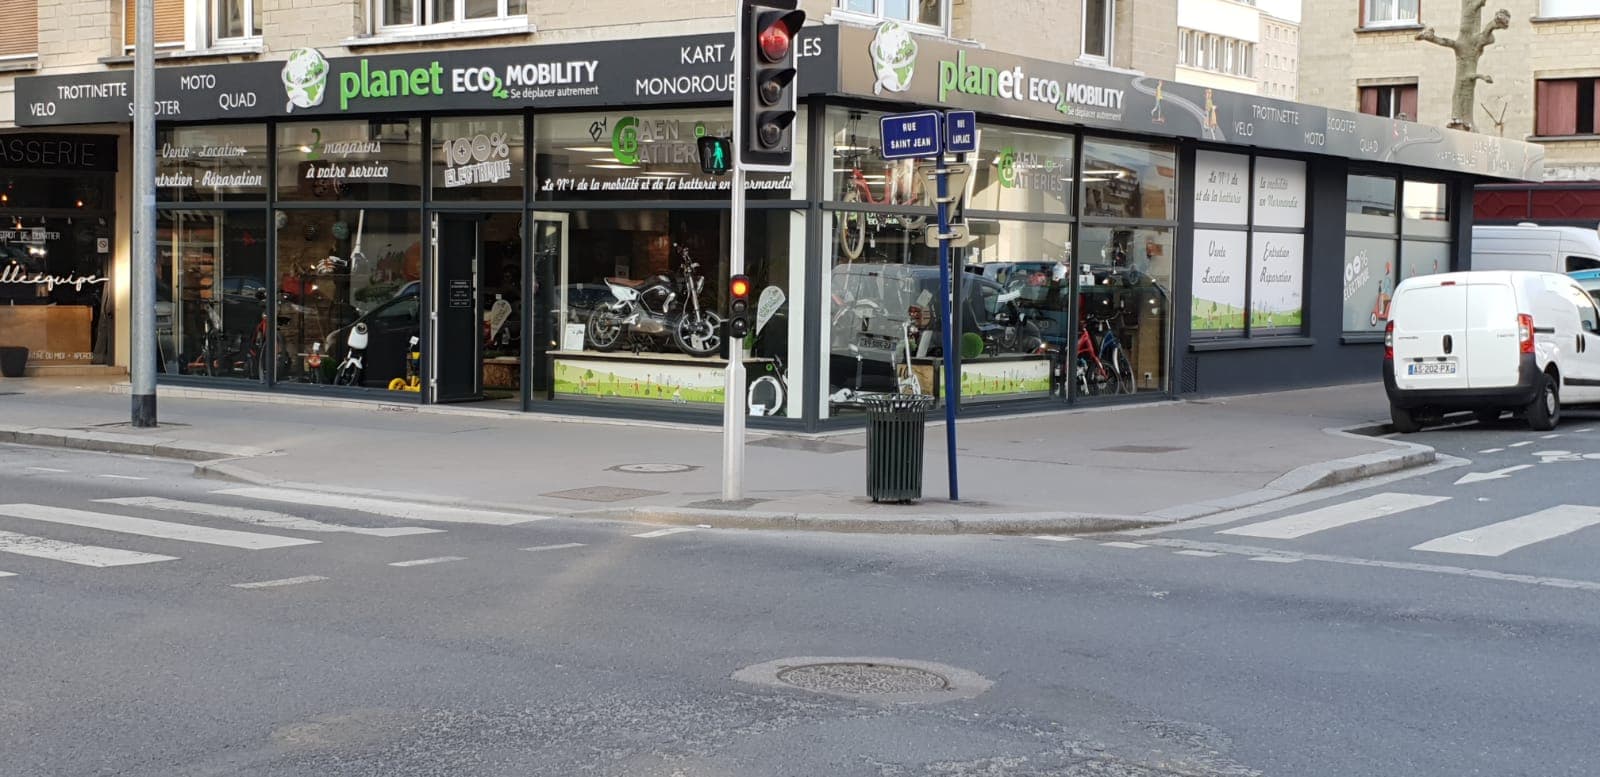 Planet Eco Moibility à Caen